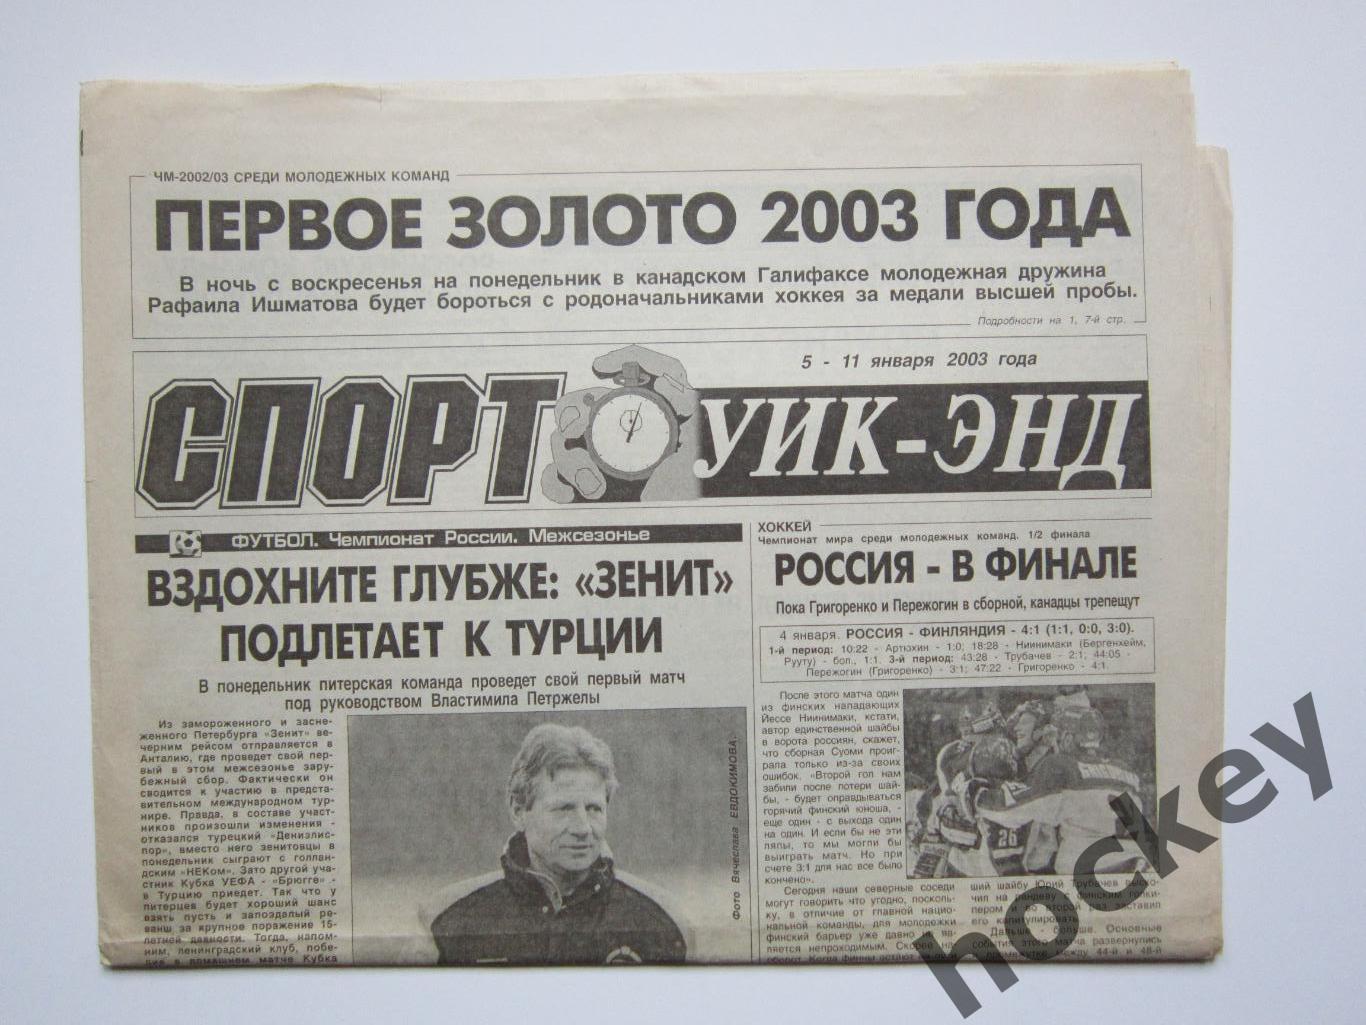 Спорт Уик-энд (Санкт-Петербург). 5 - 11 января 2003 года